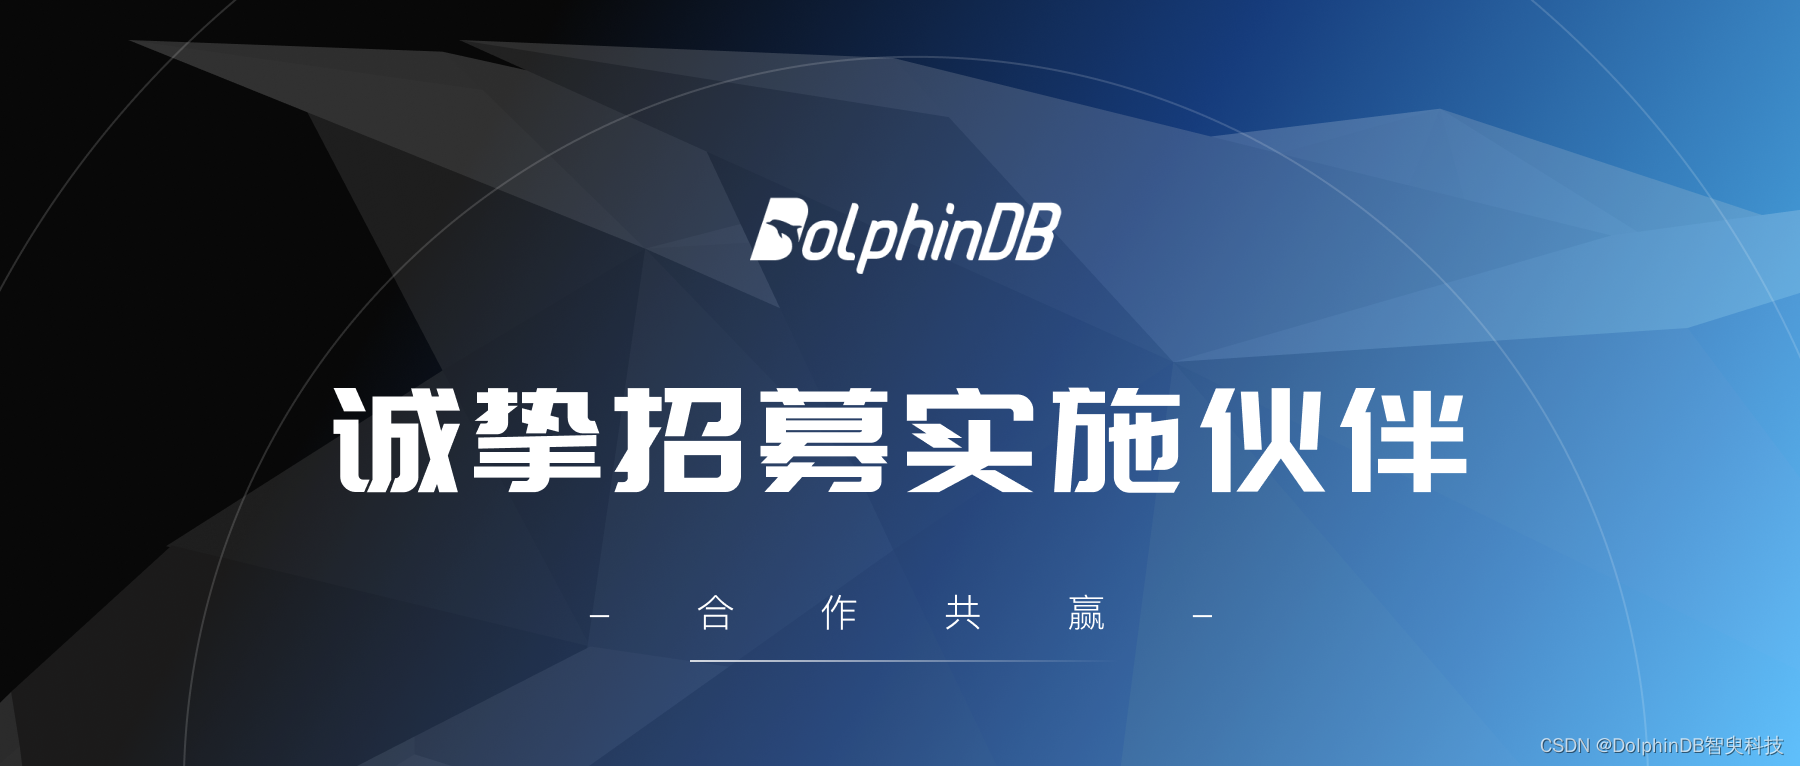 DolphinDB 诚挚招募实施伙伴